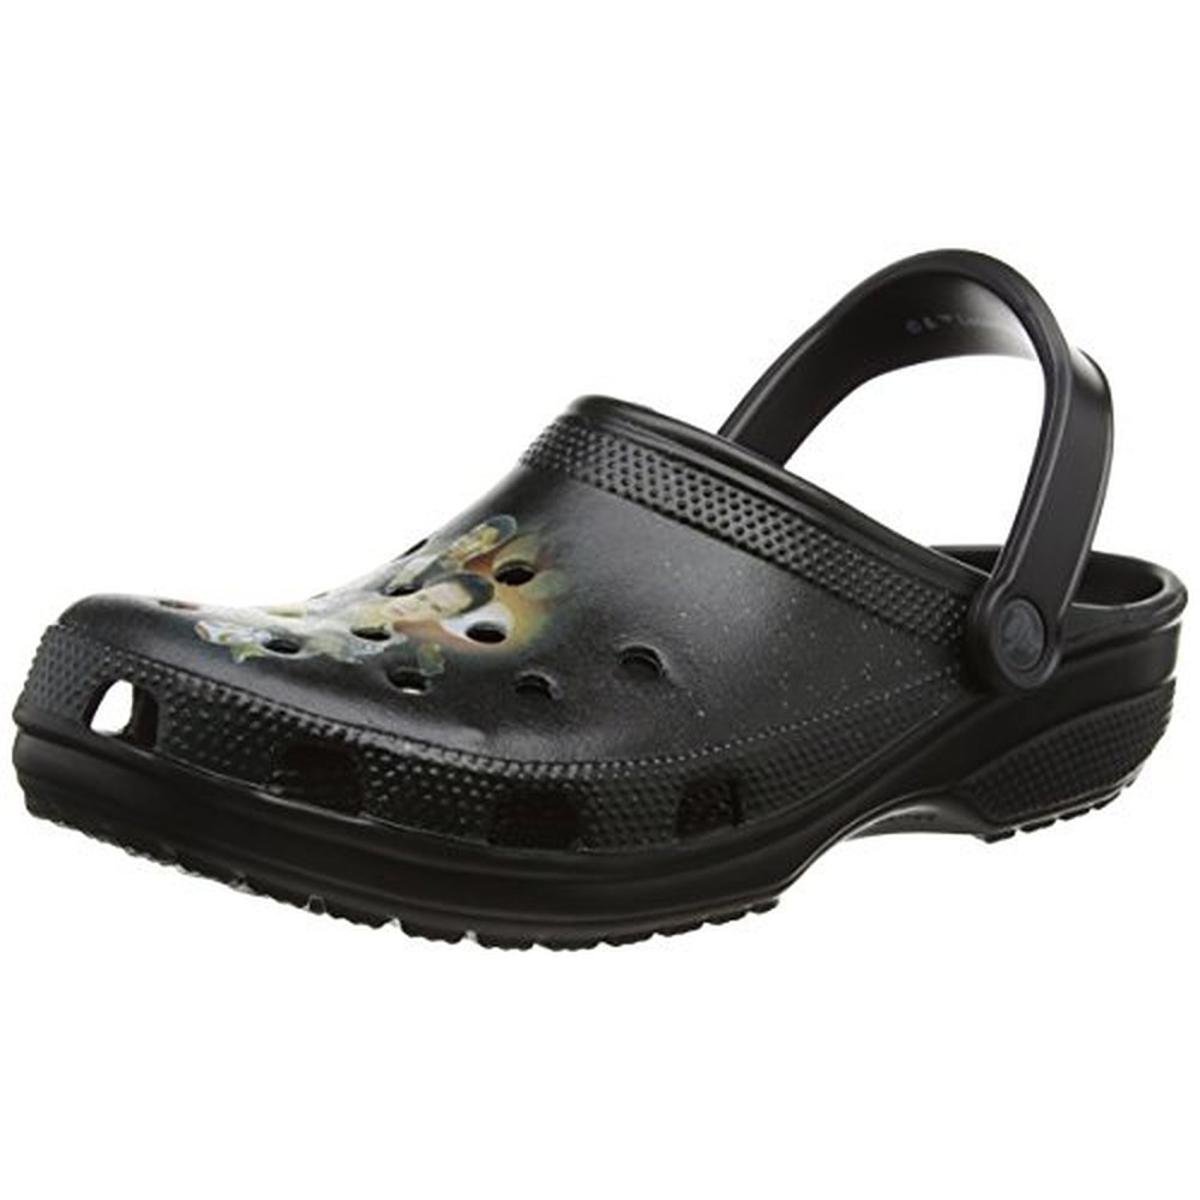 Crocs 0006 Mens Star Wars Black Mules Slide Clogs Shoes 10 M10/W12 BHFO